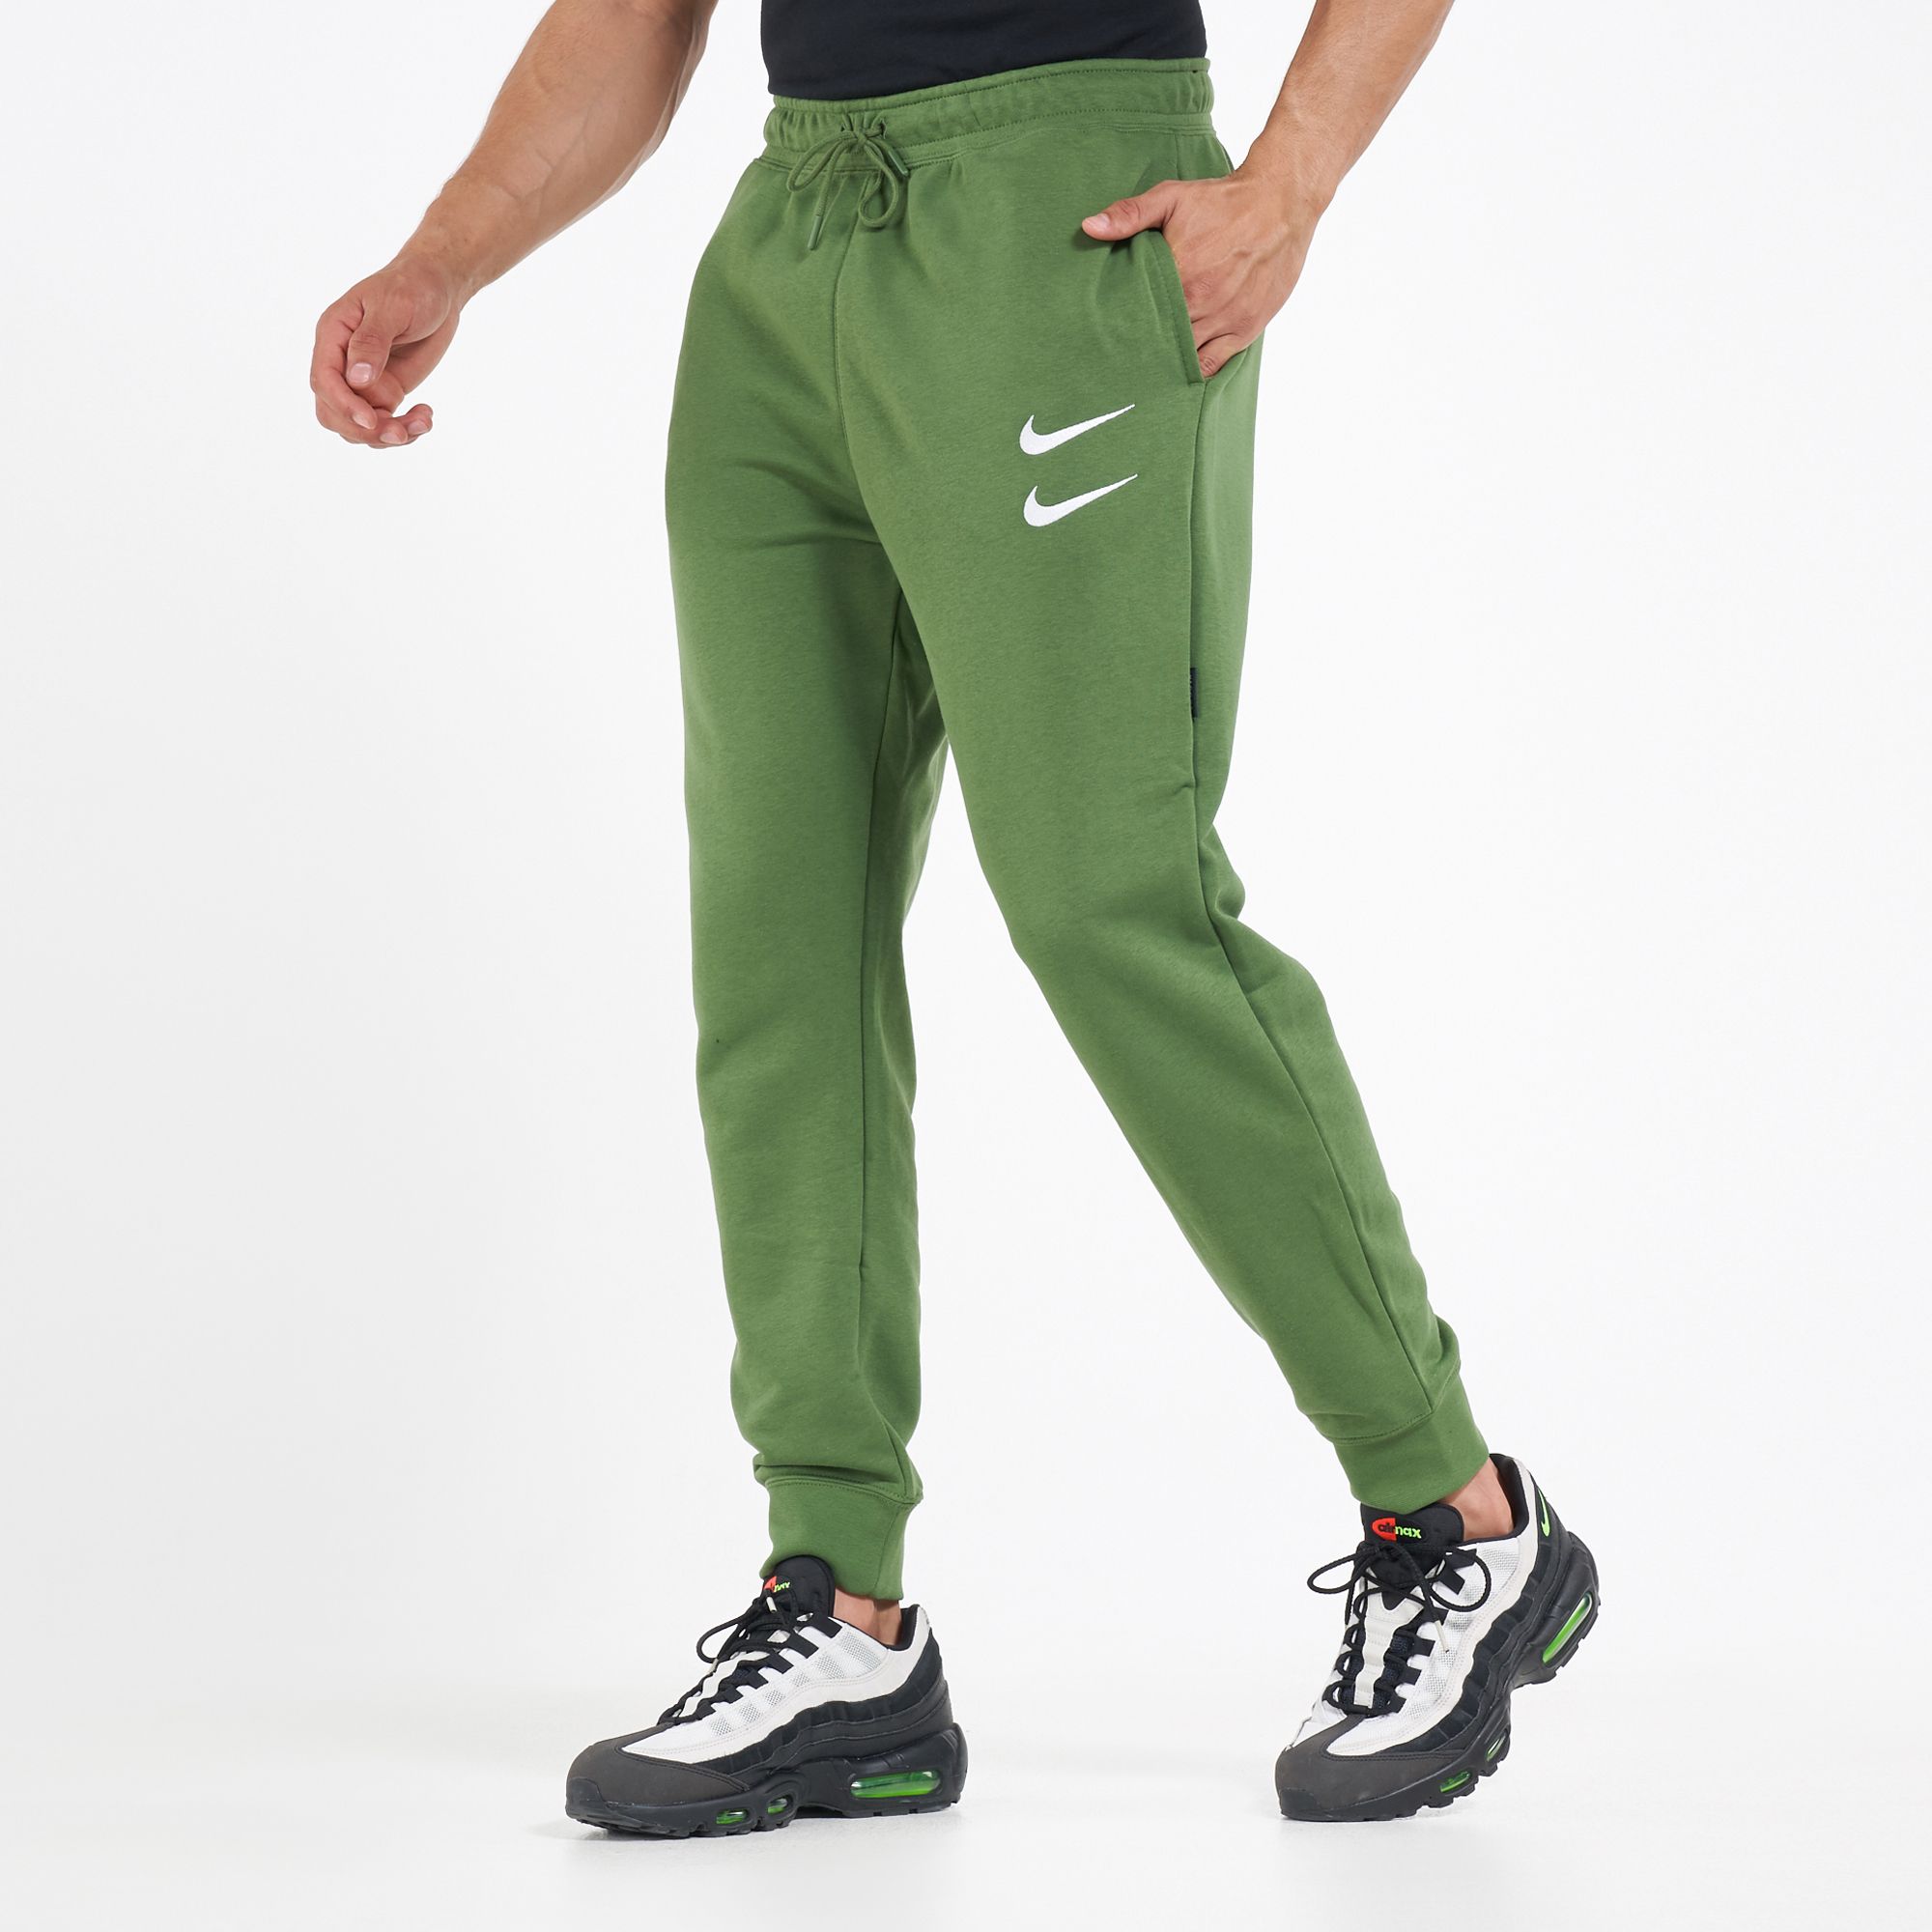 nike swoosh pants green